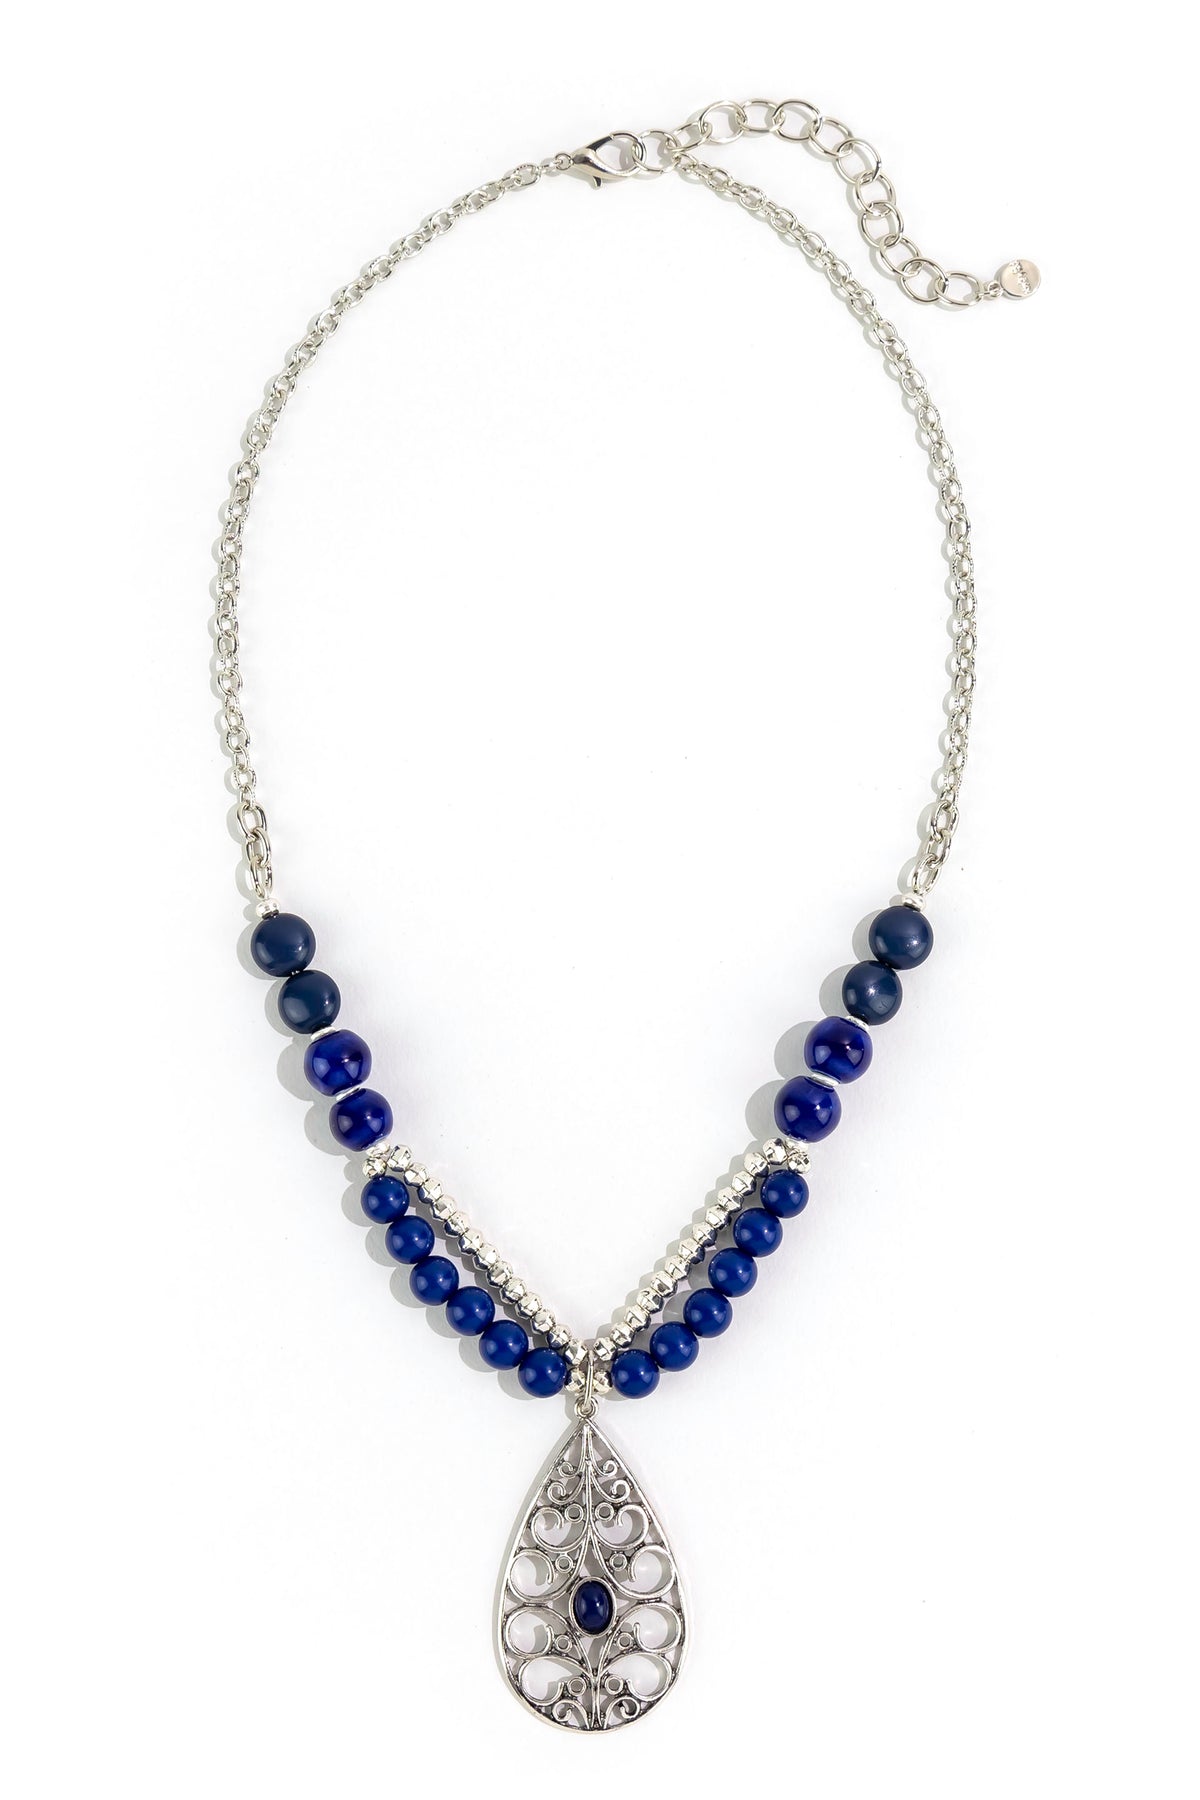 Ruby Rd. Blue Teardrop Pendant Necklace